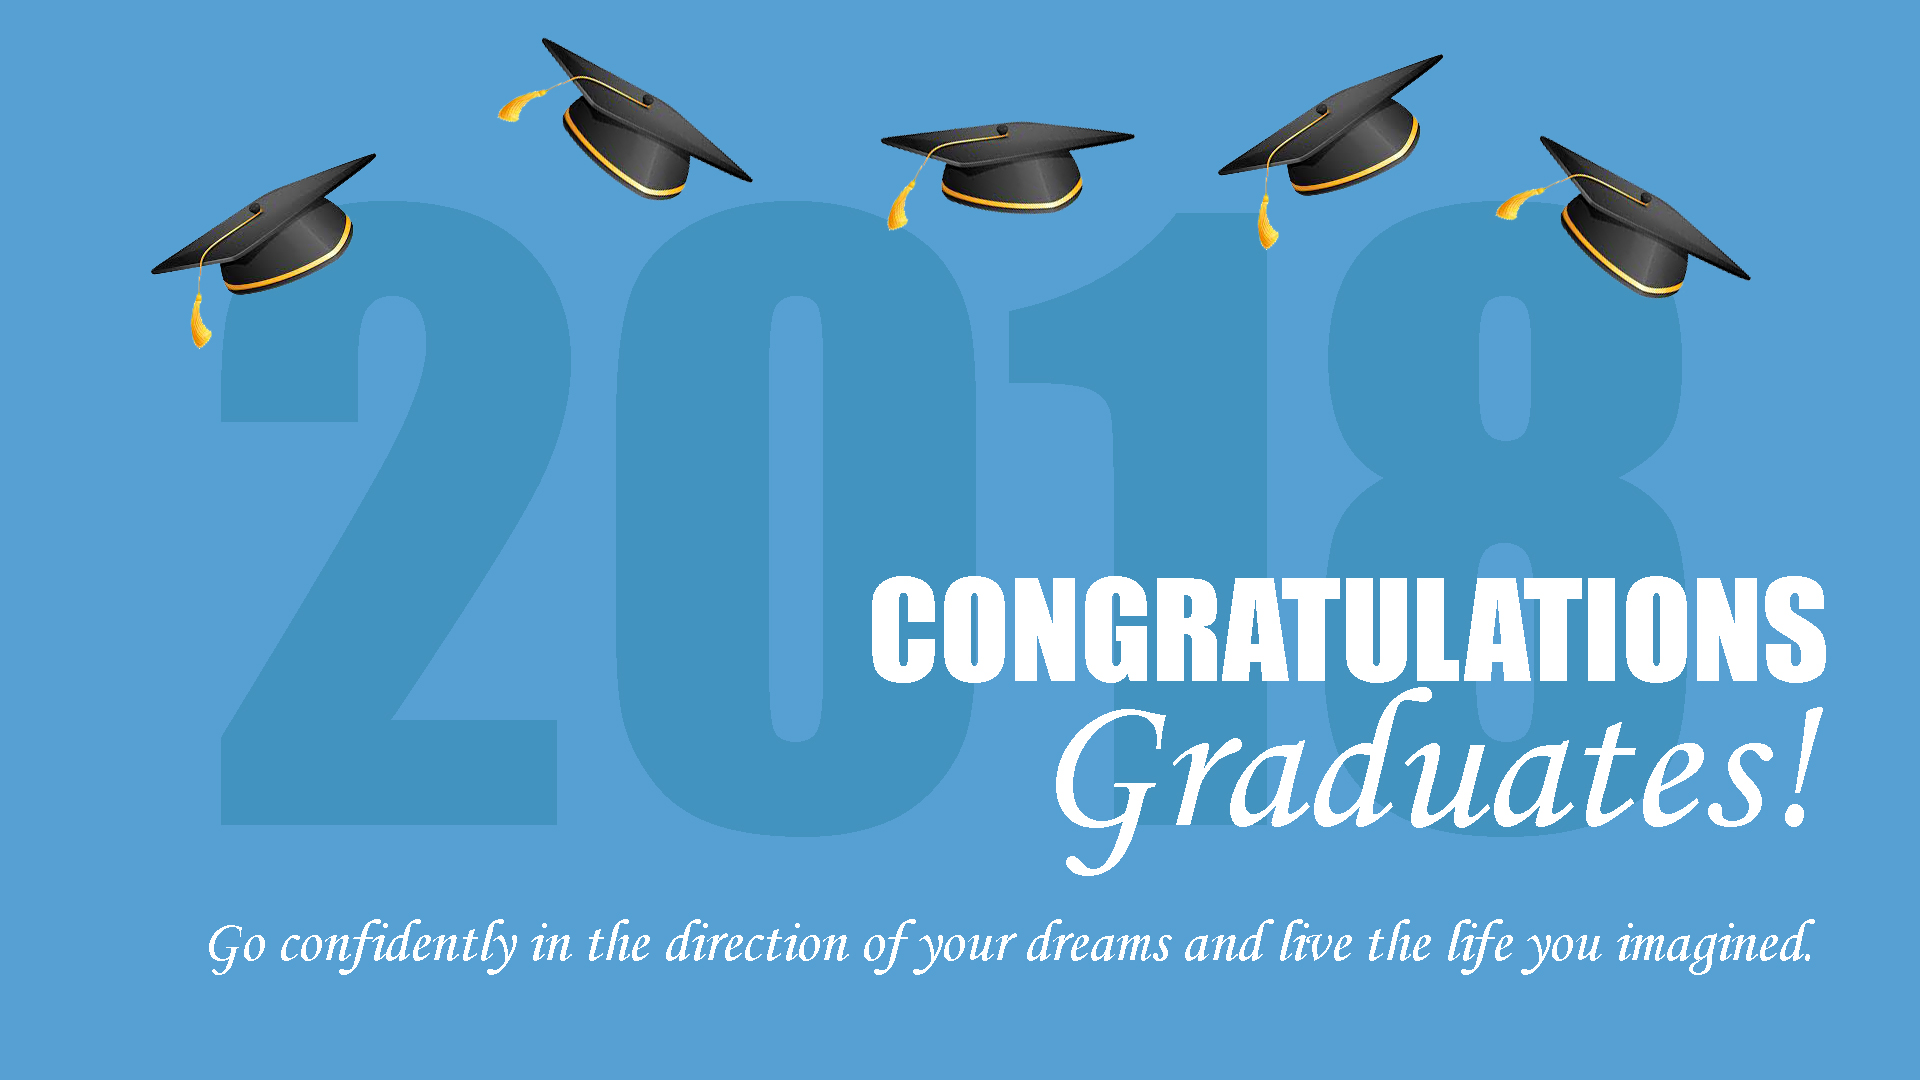 Congratulations Graduates Class of 2018! | Digital Signage - Student Affairs